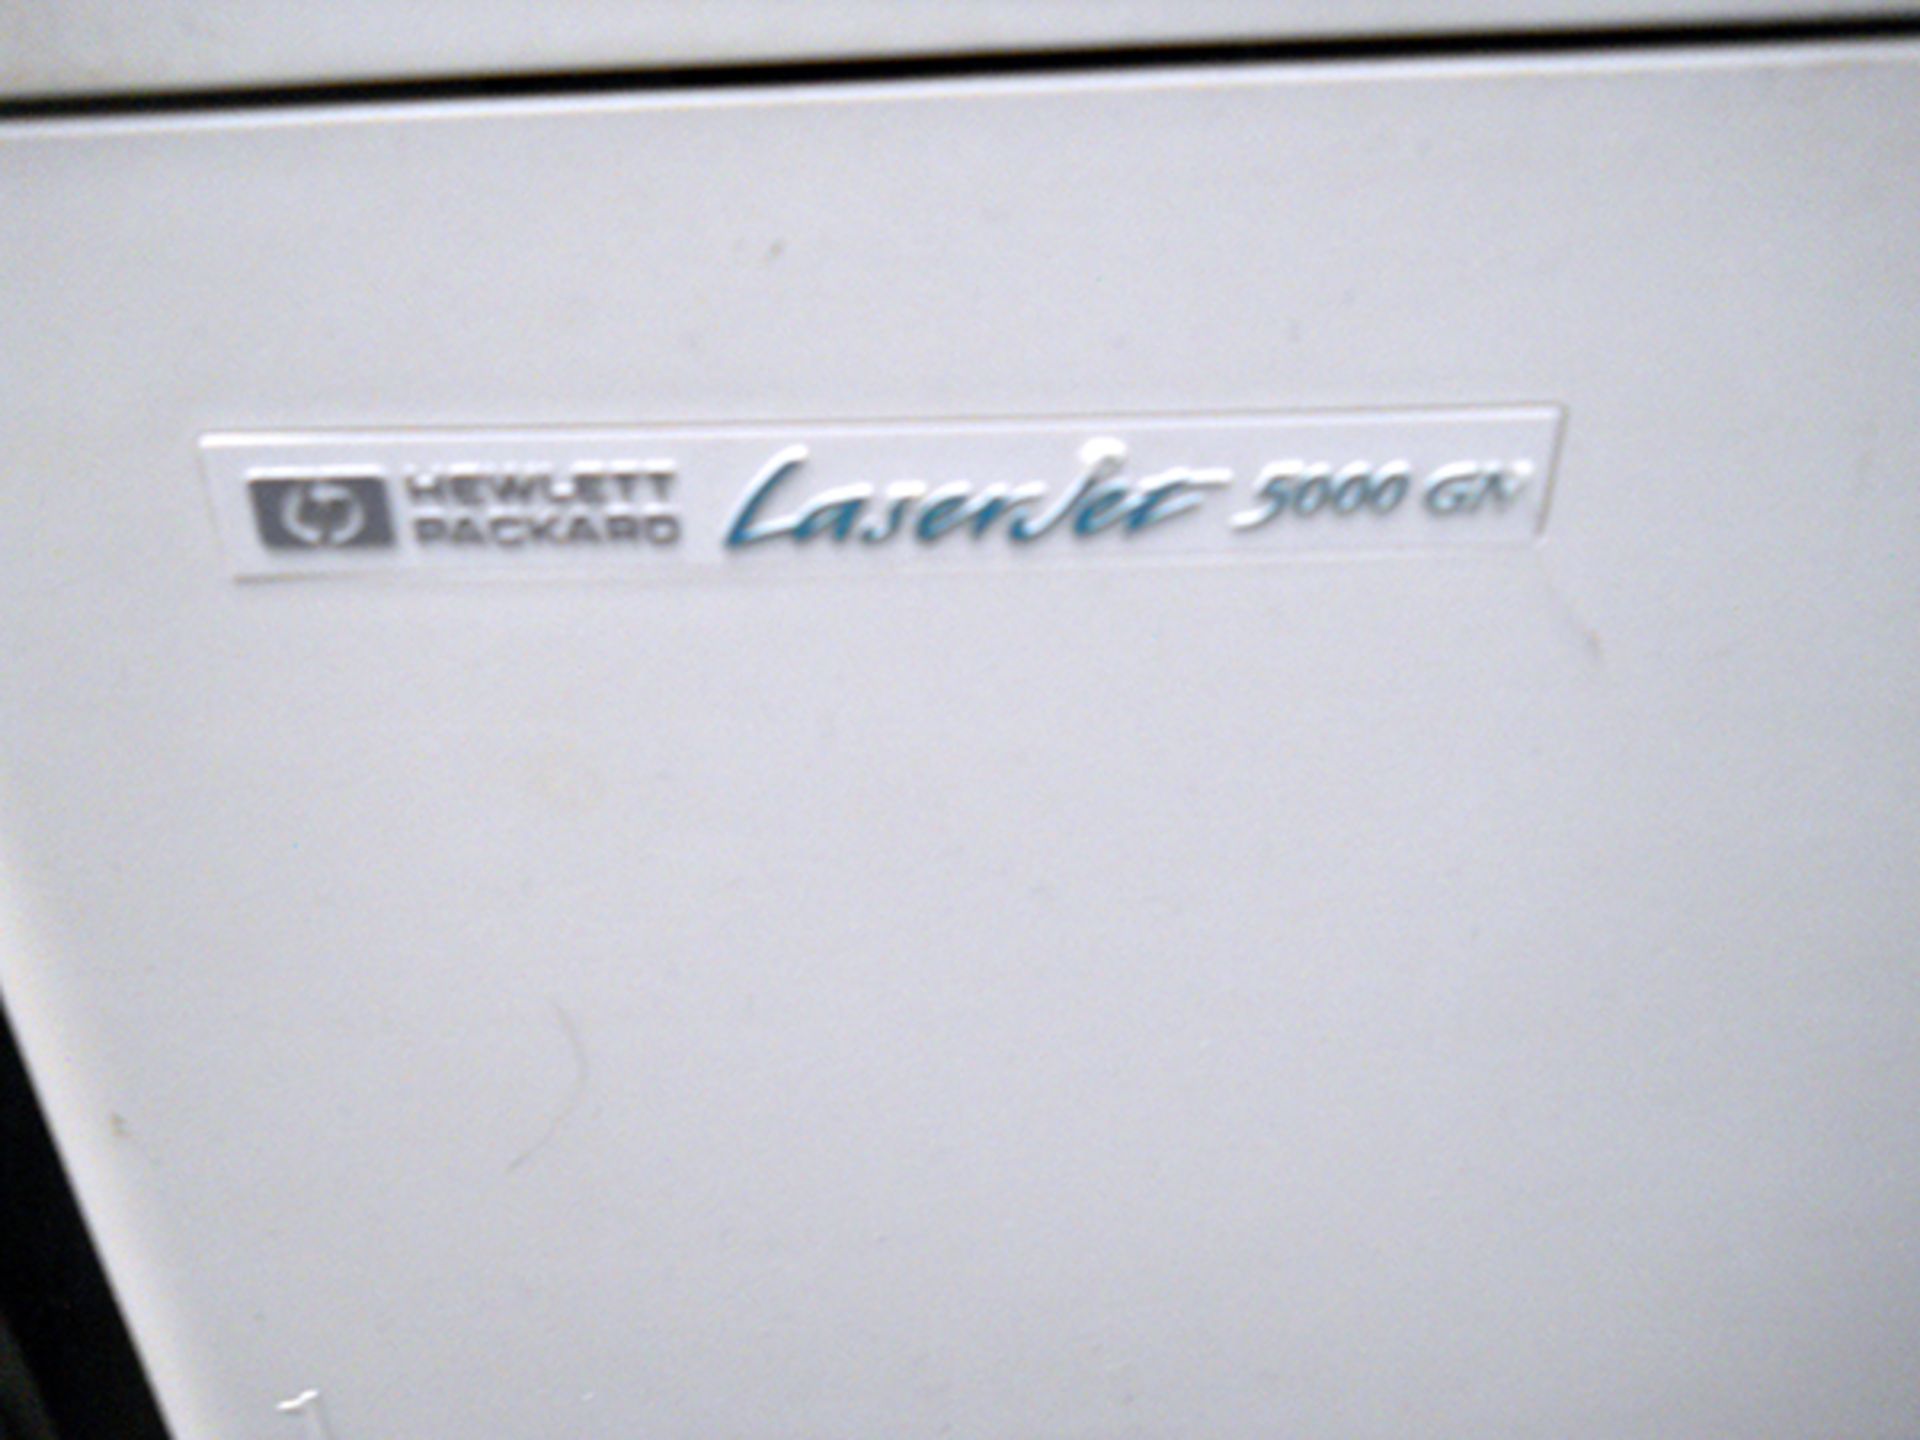 HP LaserJet 5000 GN Copier/Printer - Image 4 of 5